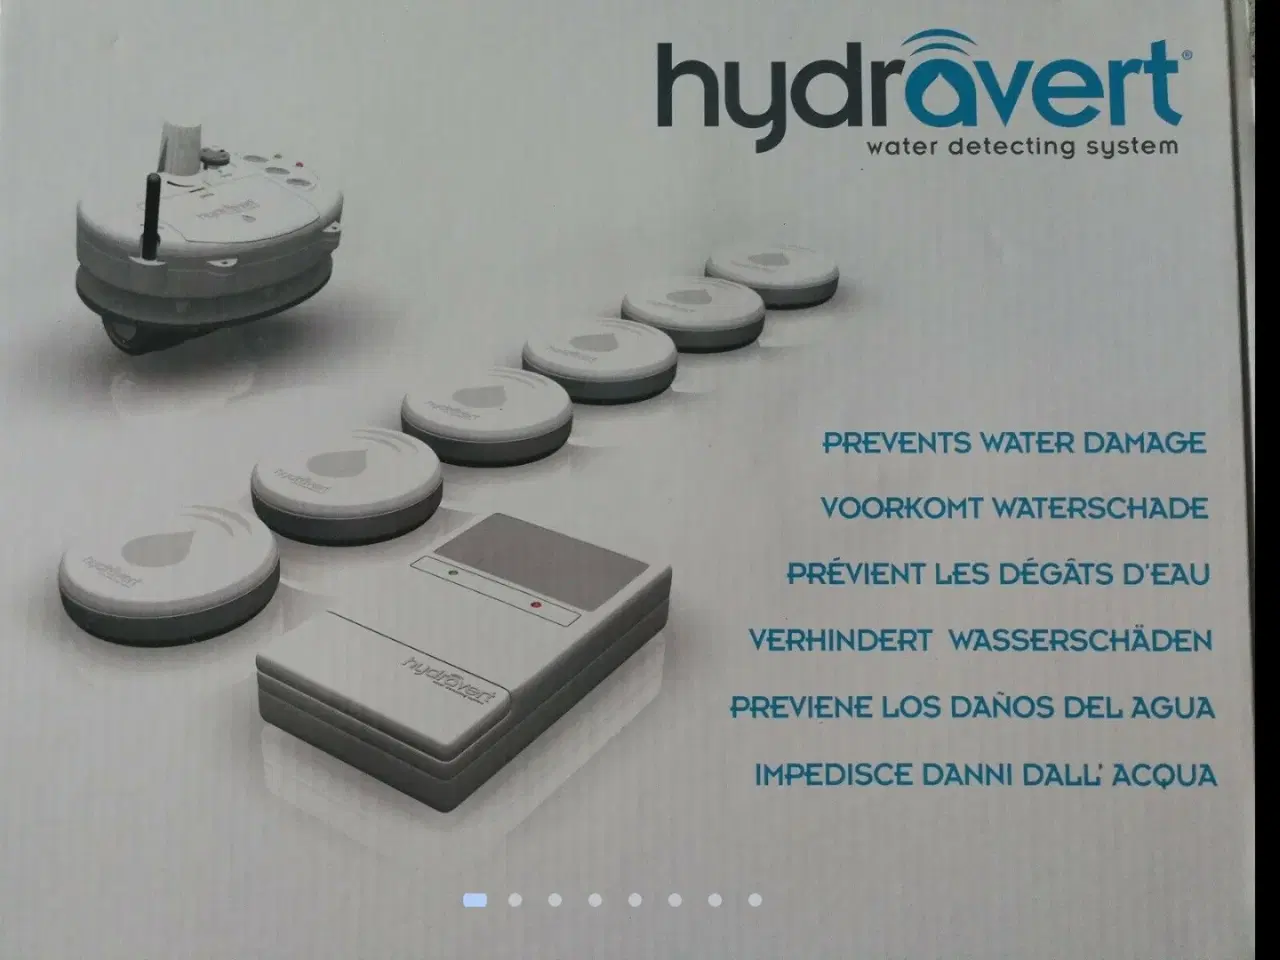 Billede 8 - Water detecting system, Hydravert - Water detectin